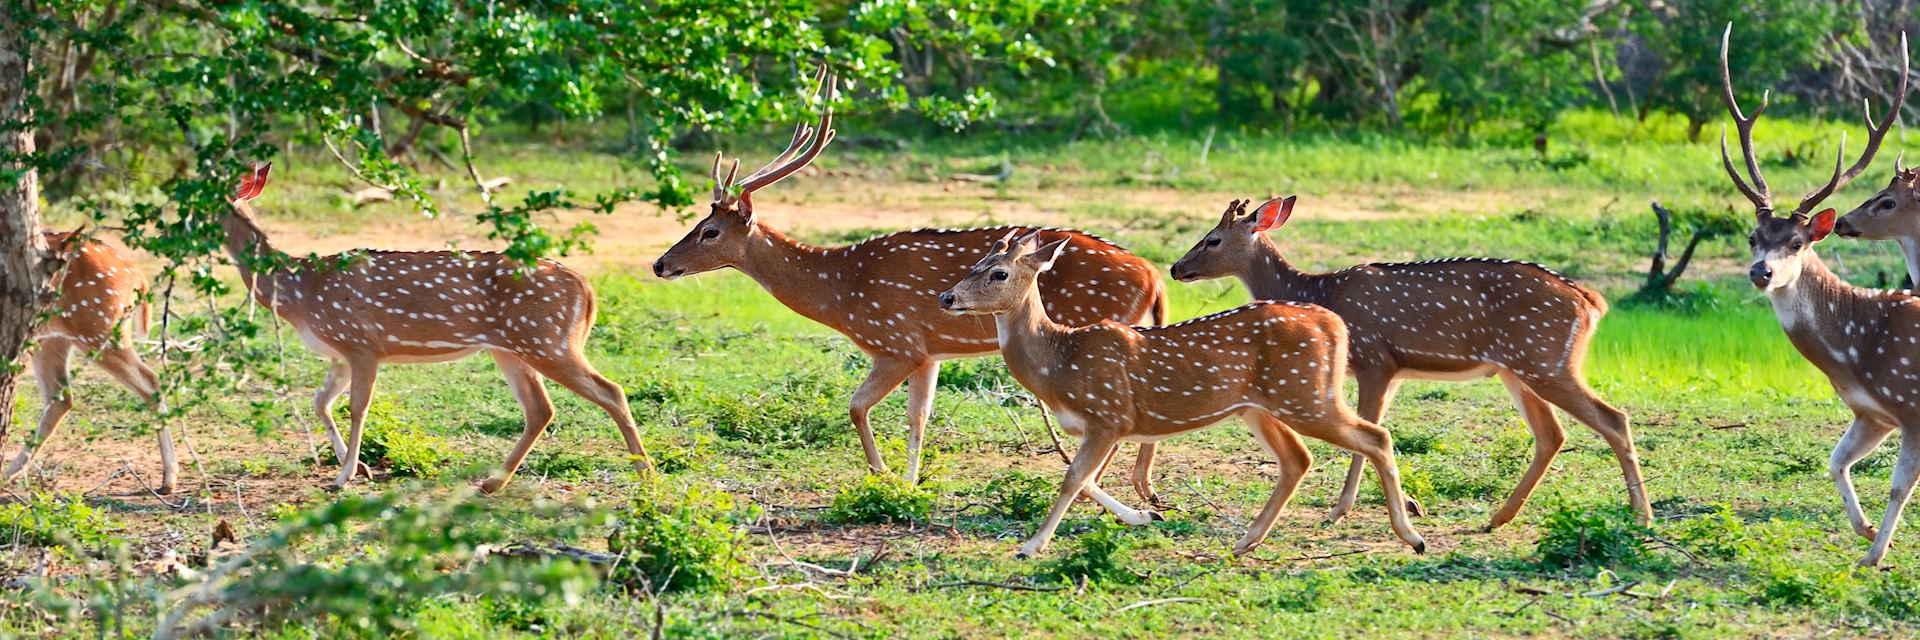 Spotted deer in Yala National Park, Sri Lanka